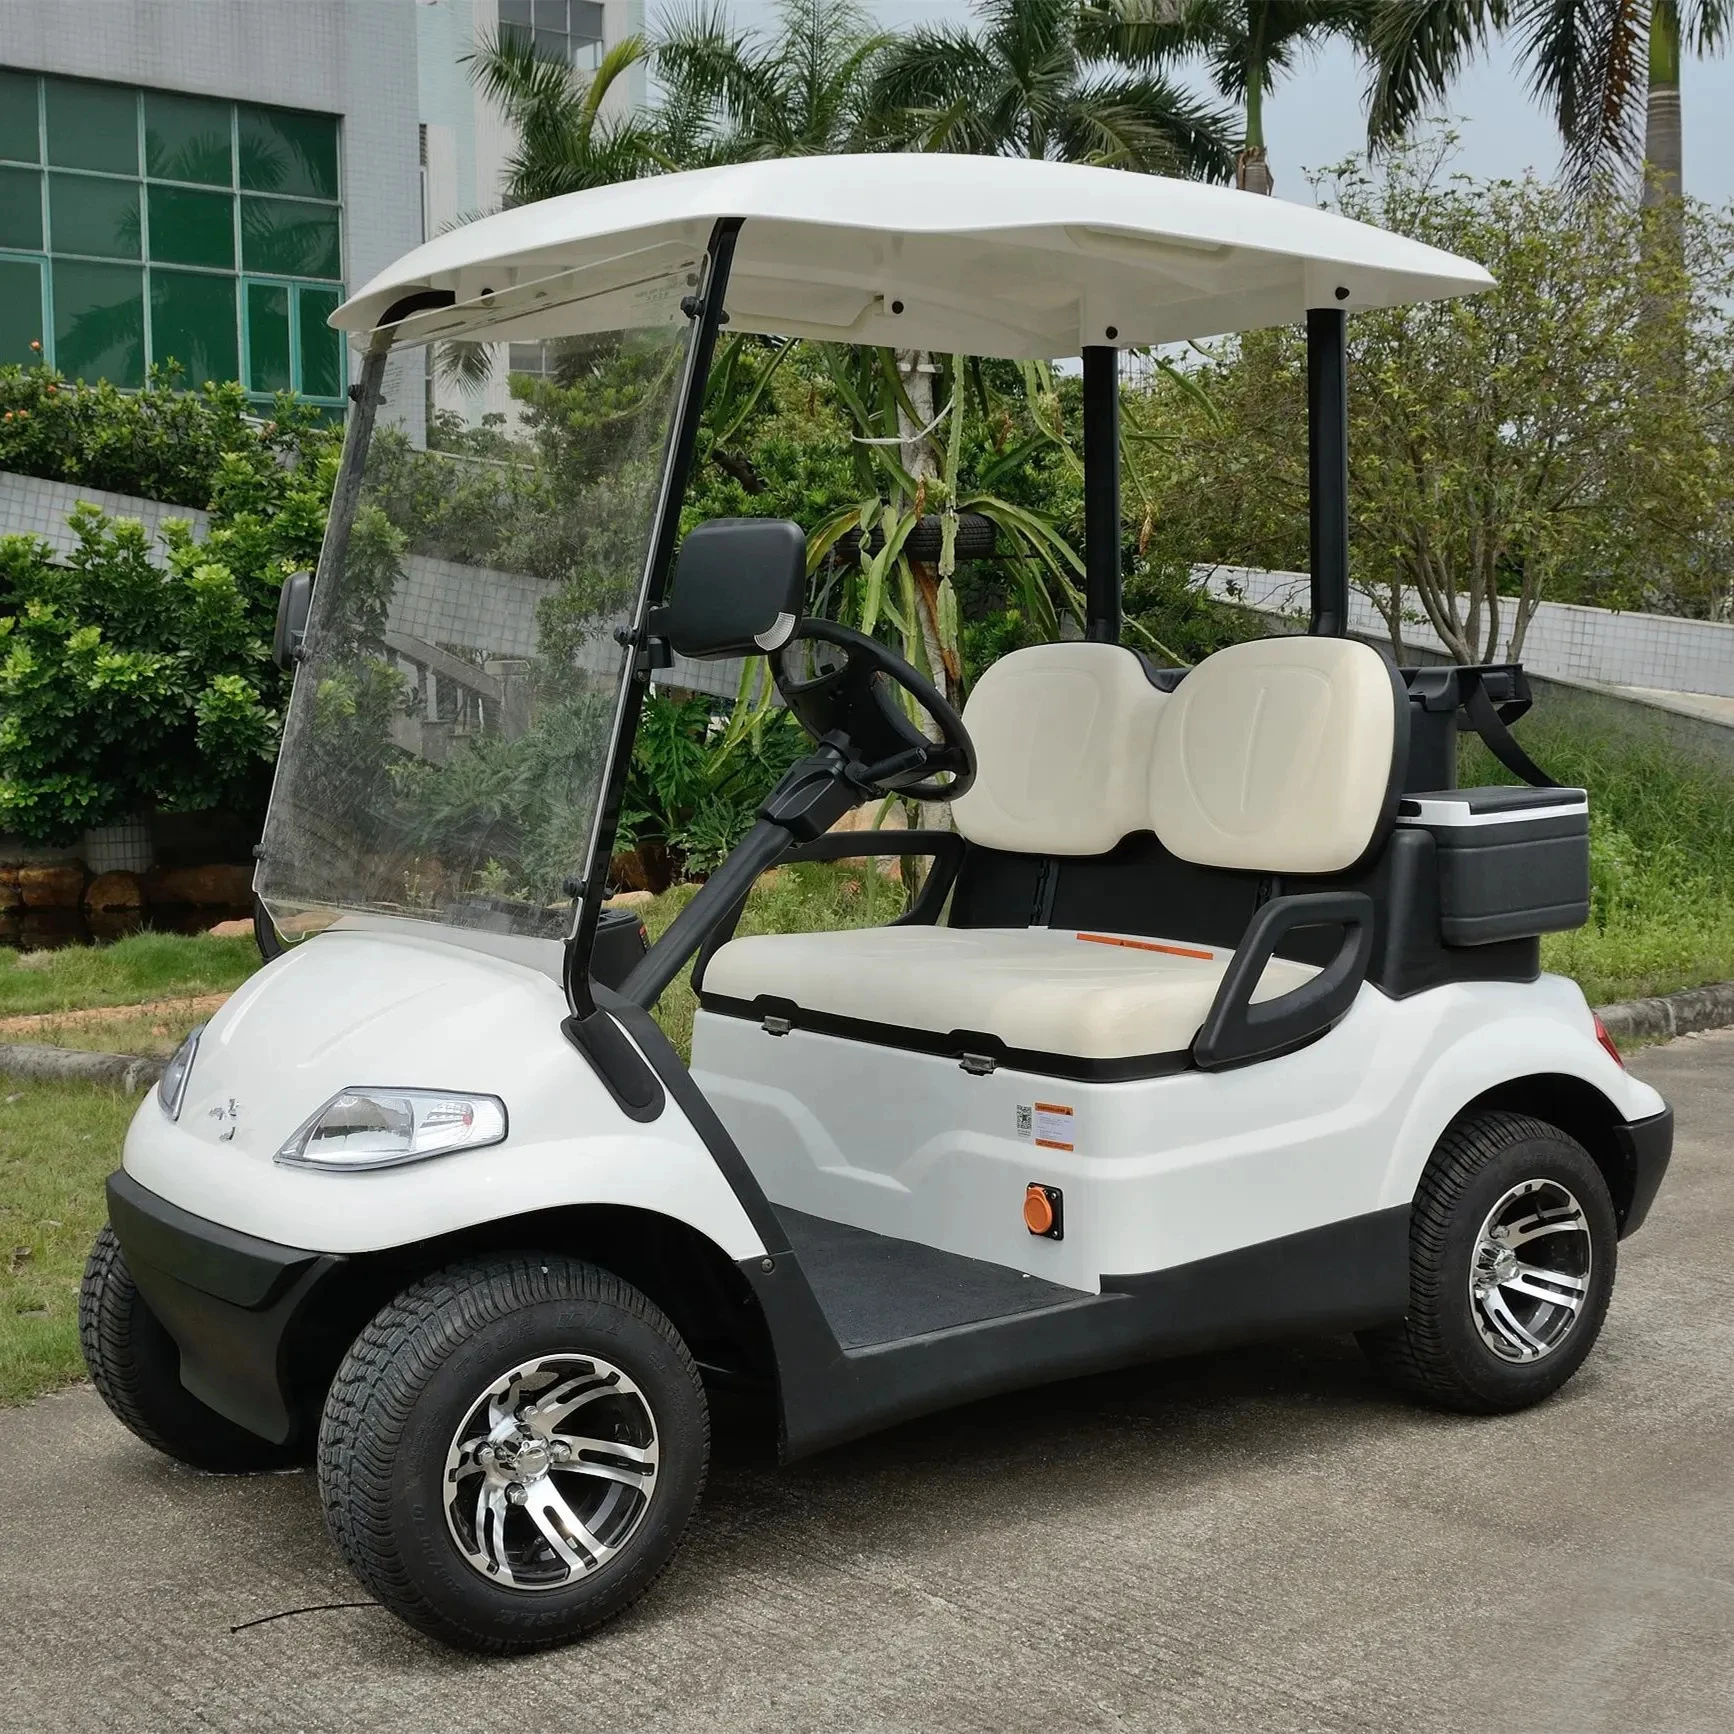 Mini Street 2 Seater Electric Golf Carts Car Utv Buggy For Sale - Buy 2 ...